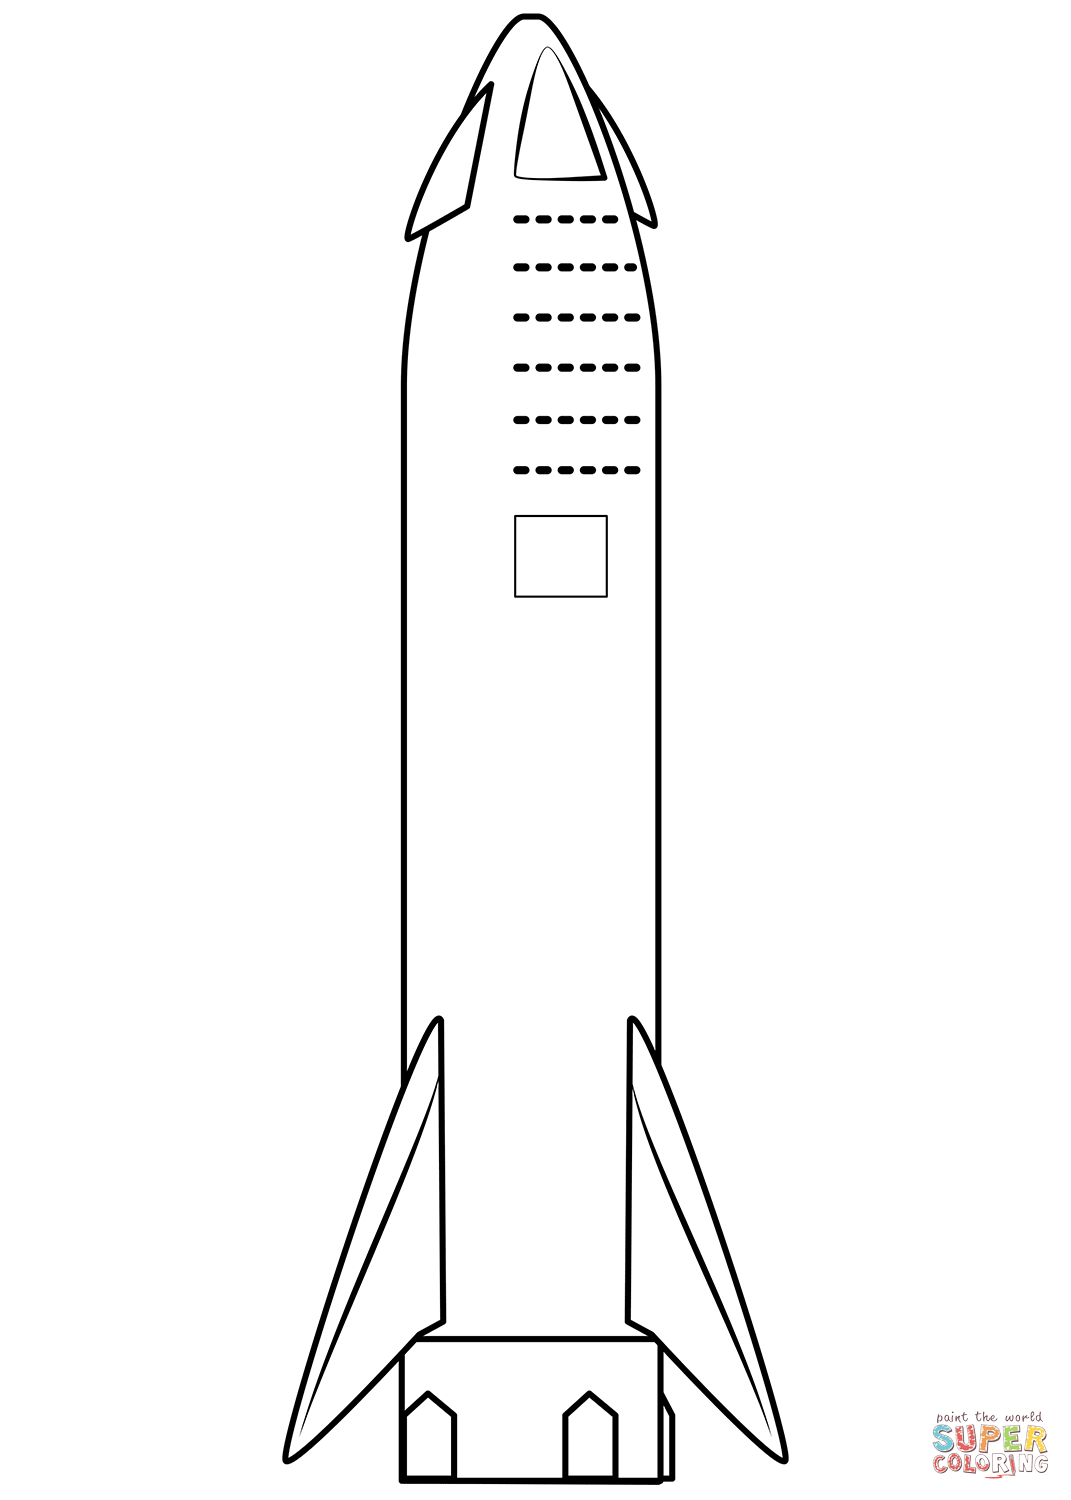 Spacex starship